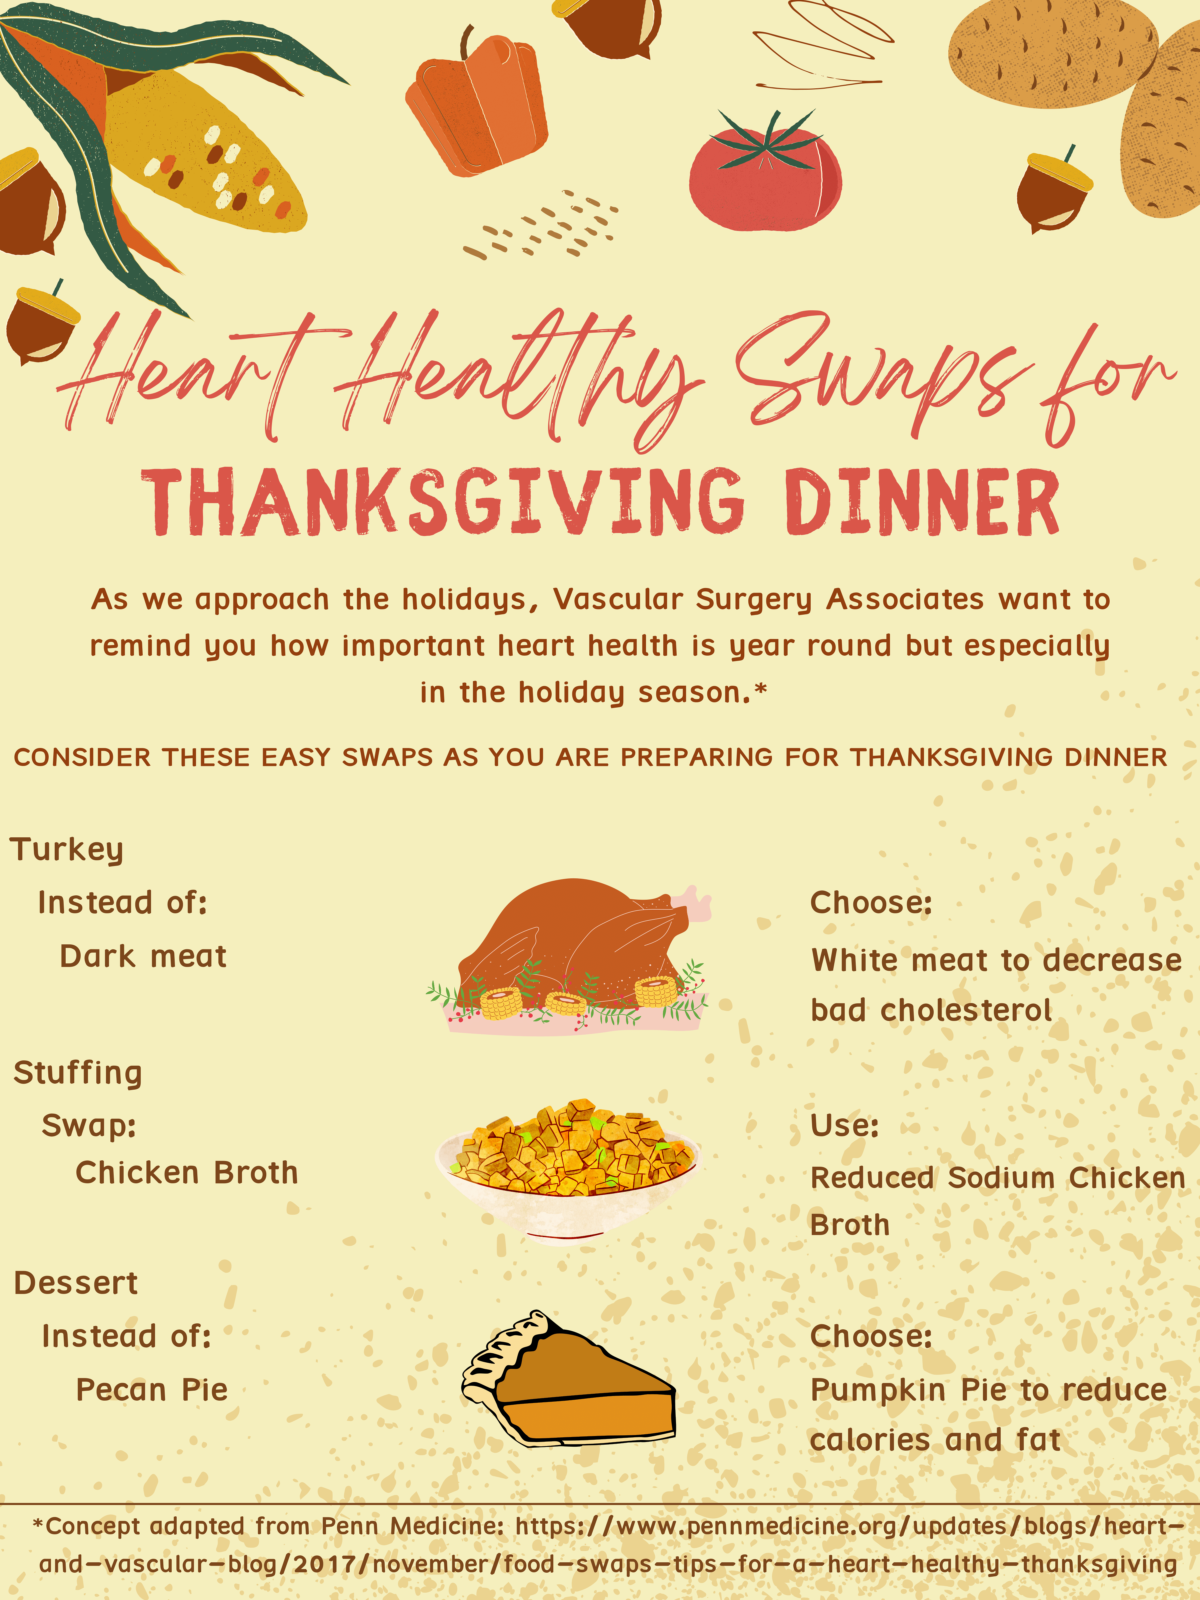 Heart Healthy Swaps for Thanksgiving Dinner – Vascular Surgery Associates